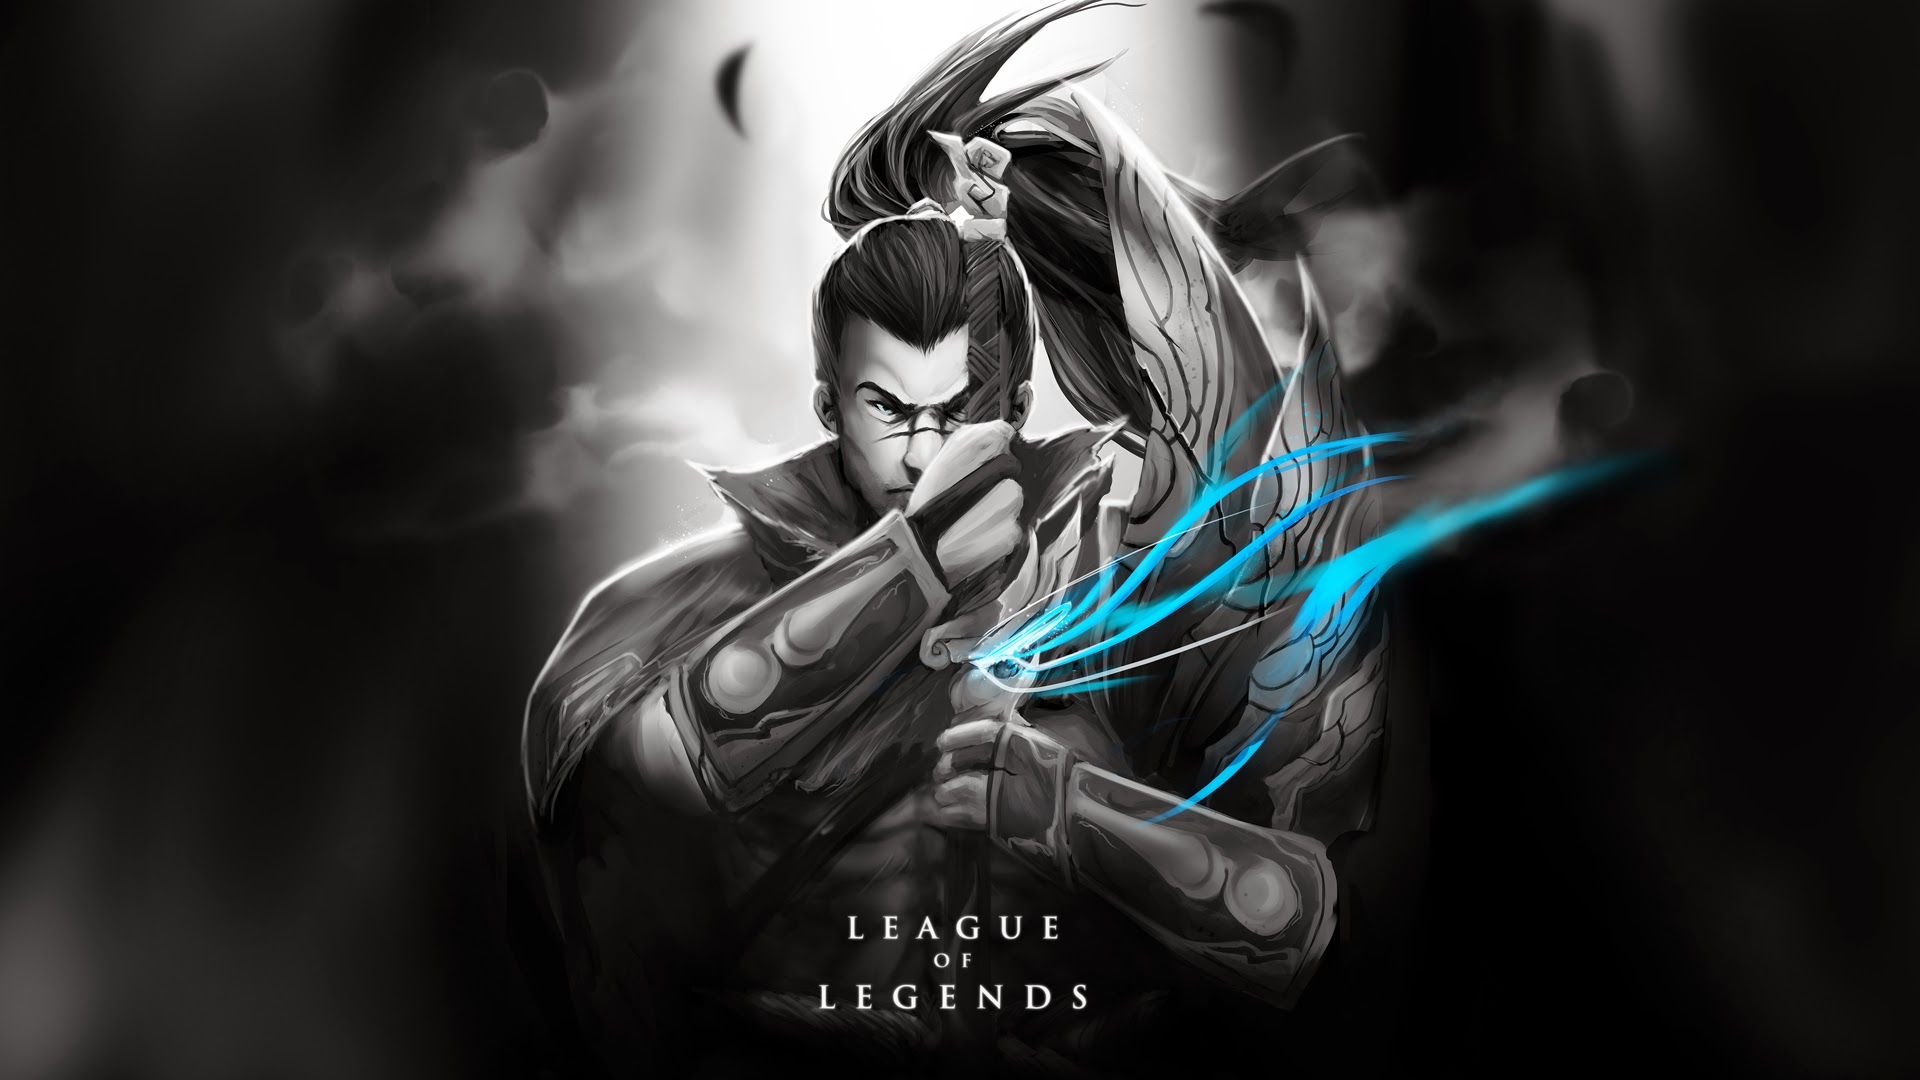 Yasuo League of Legends Art 7j Wallpaper HD